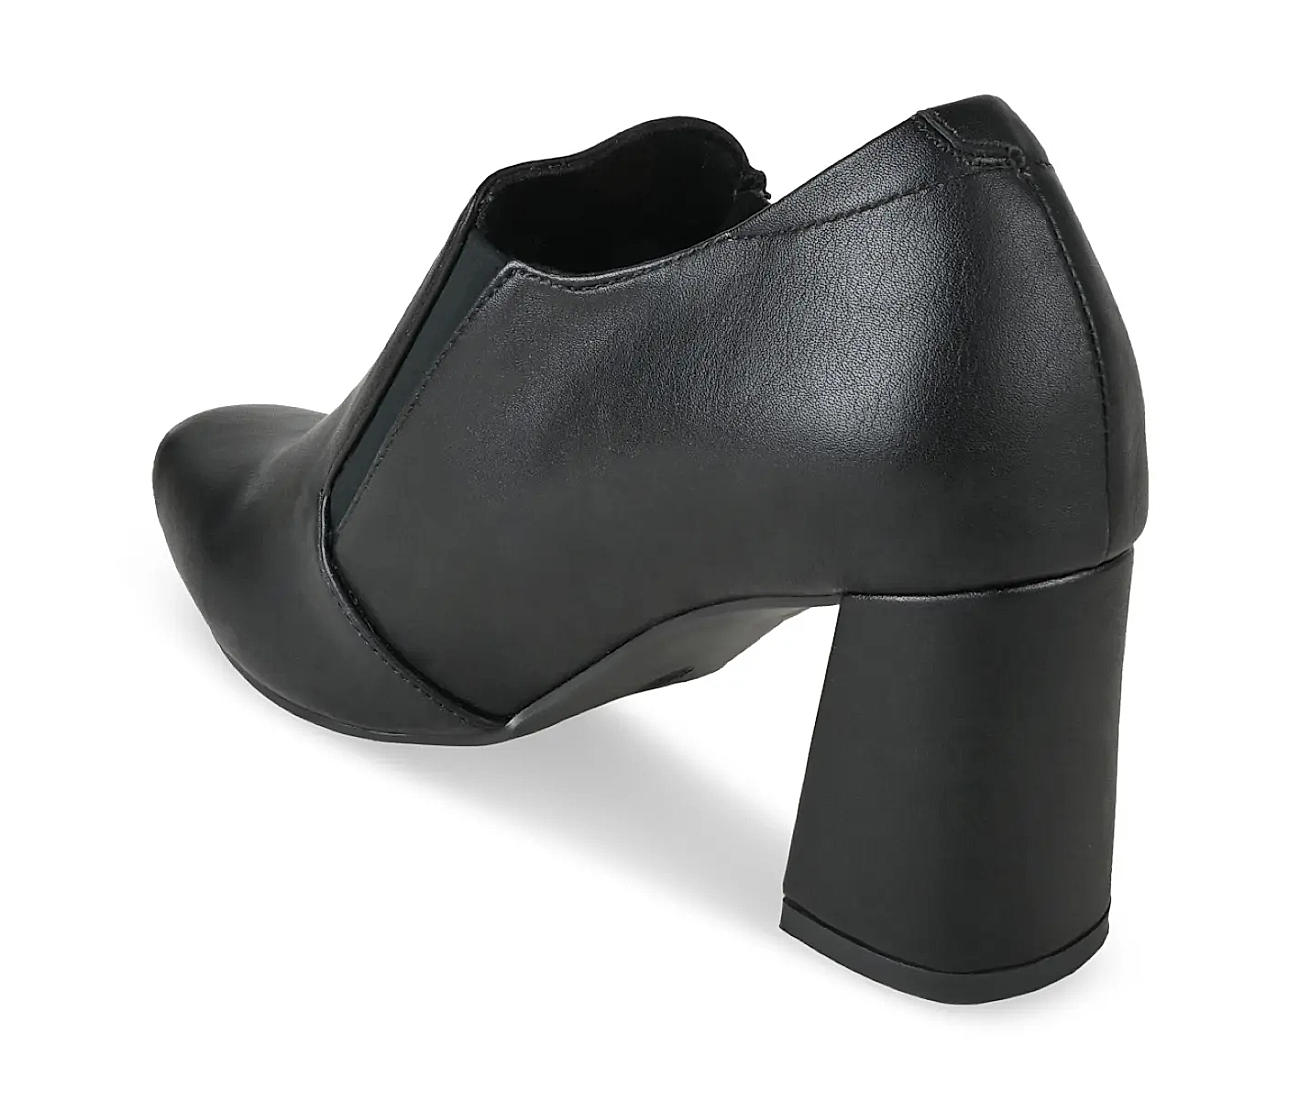 Way Up High - Black Heel | Over The Knee Boots | Black high boots, Knee  boots outfit, High knee boots outfit